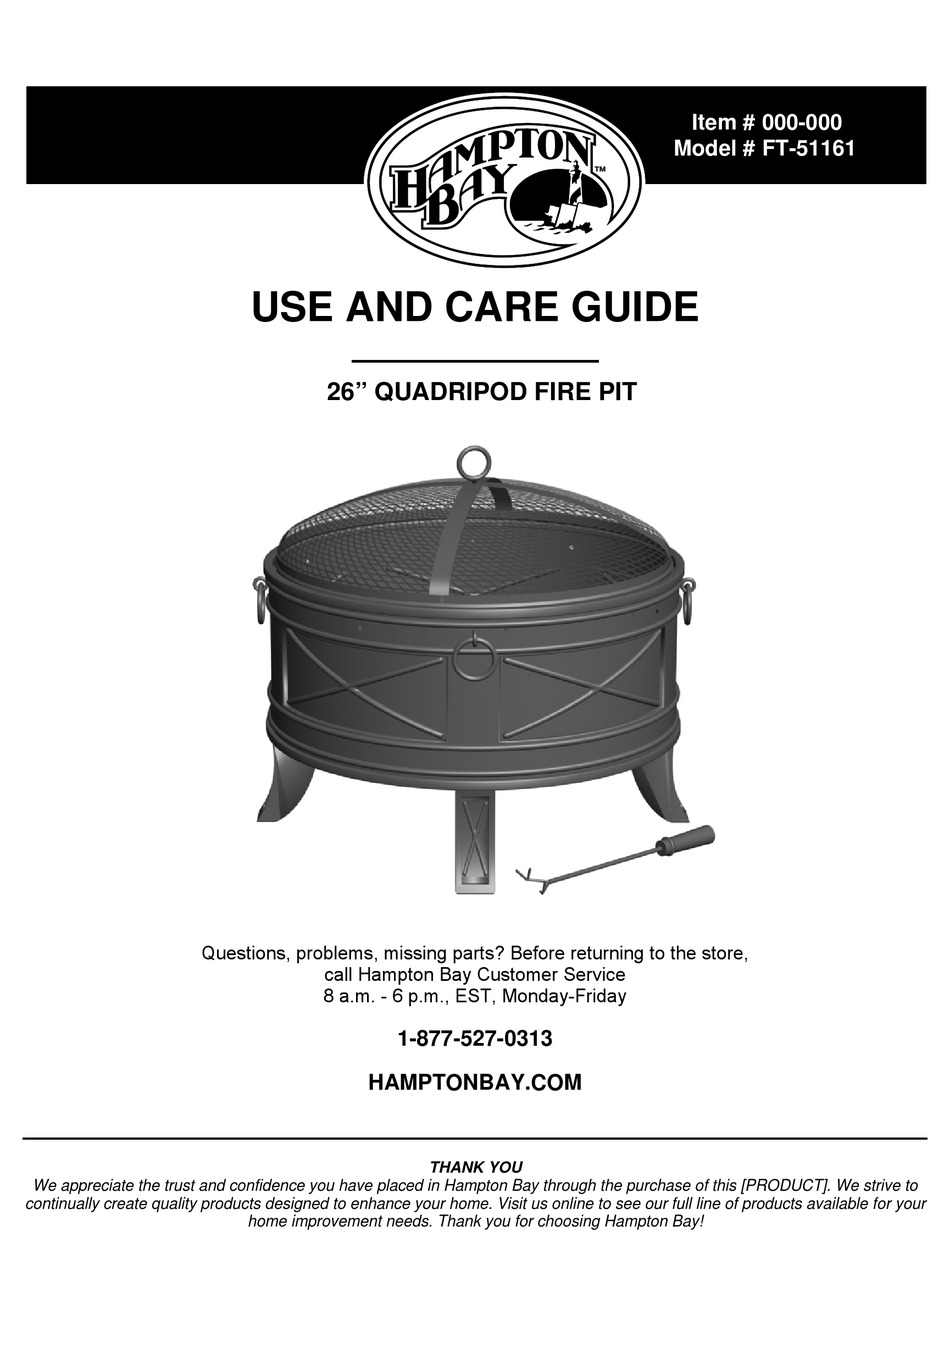 Hampton Bay Ft 51161 Use And Care, Hampton Bay Quadripod Fire Pit